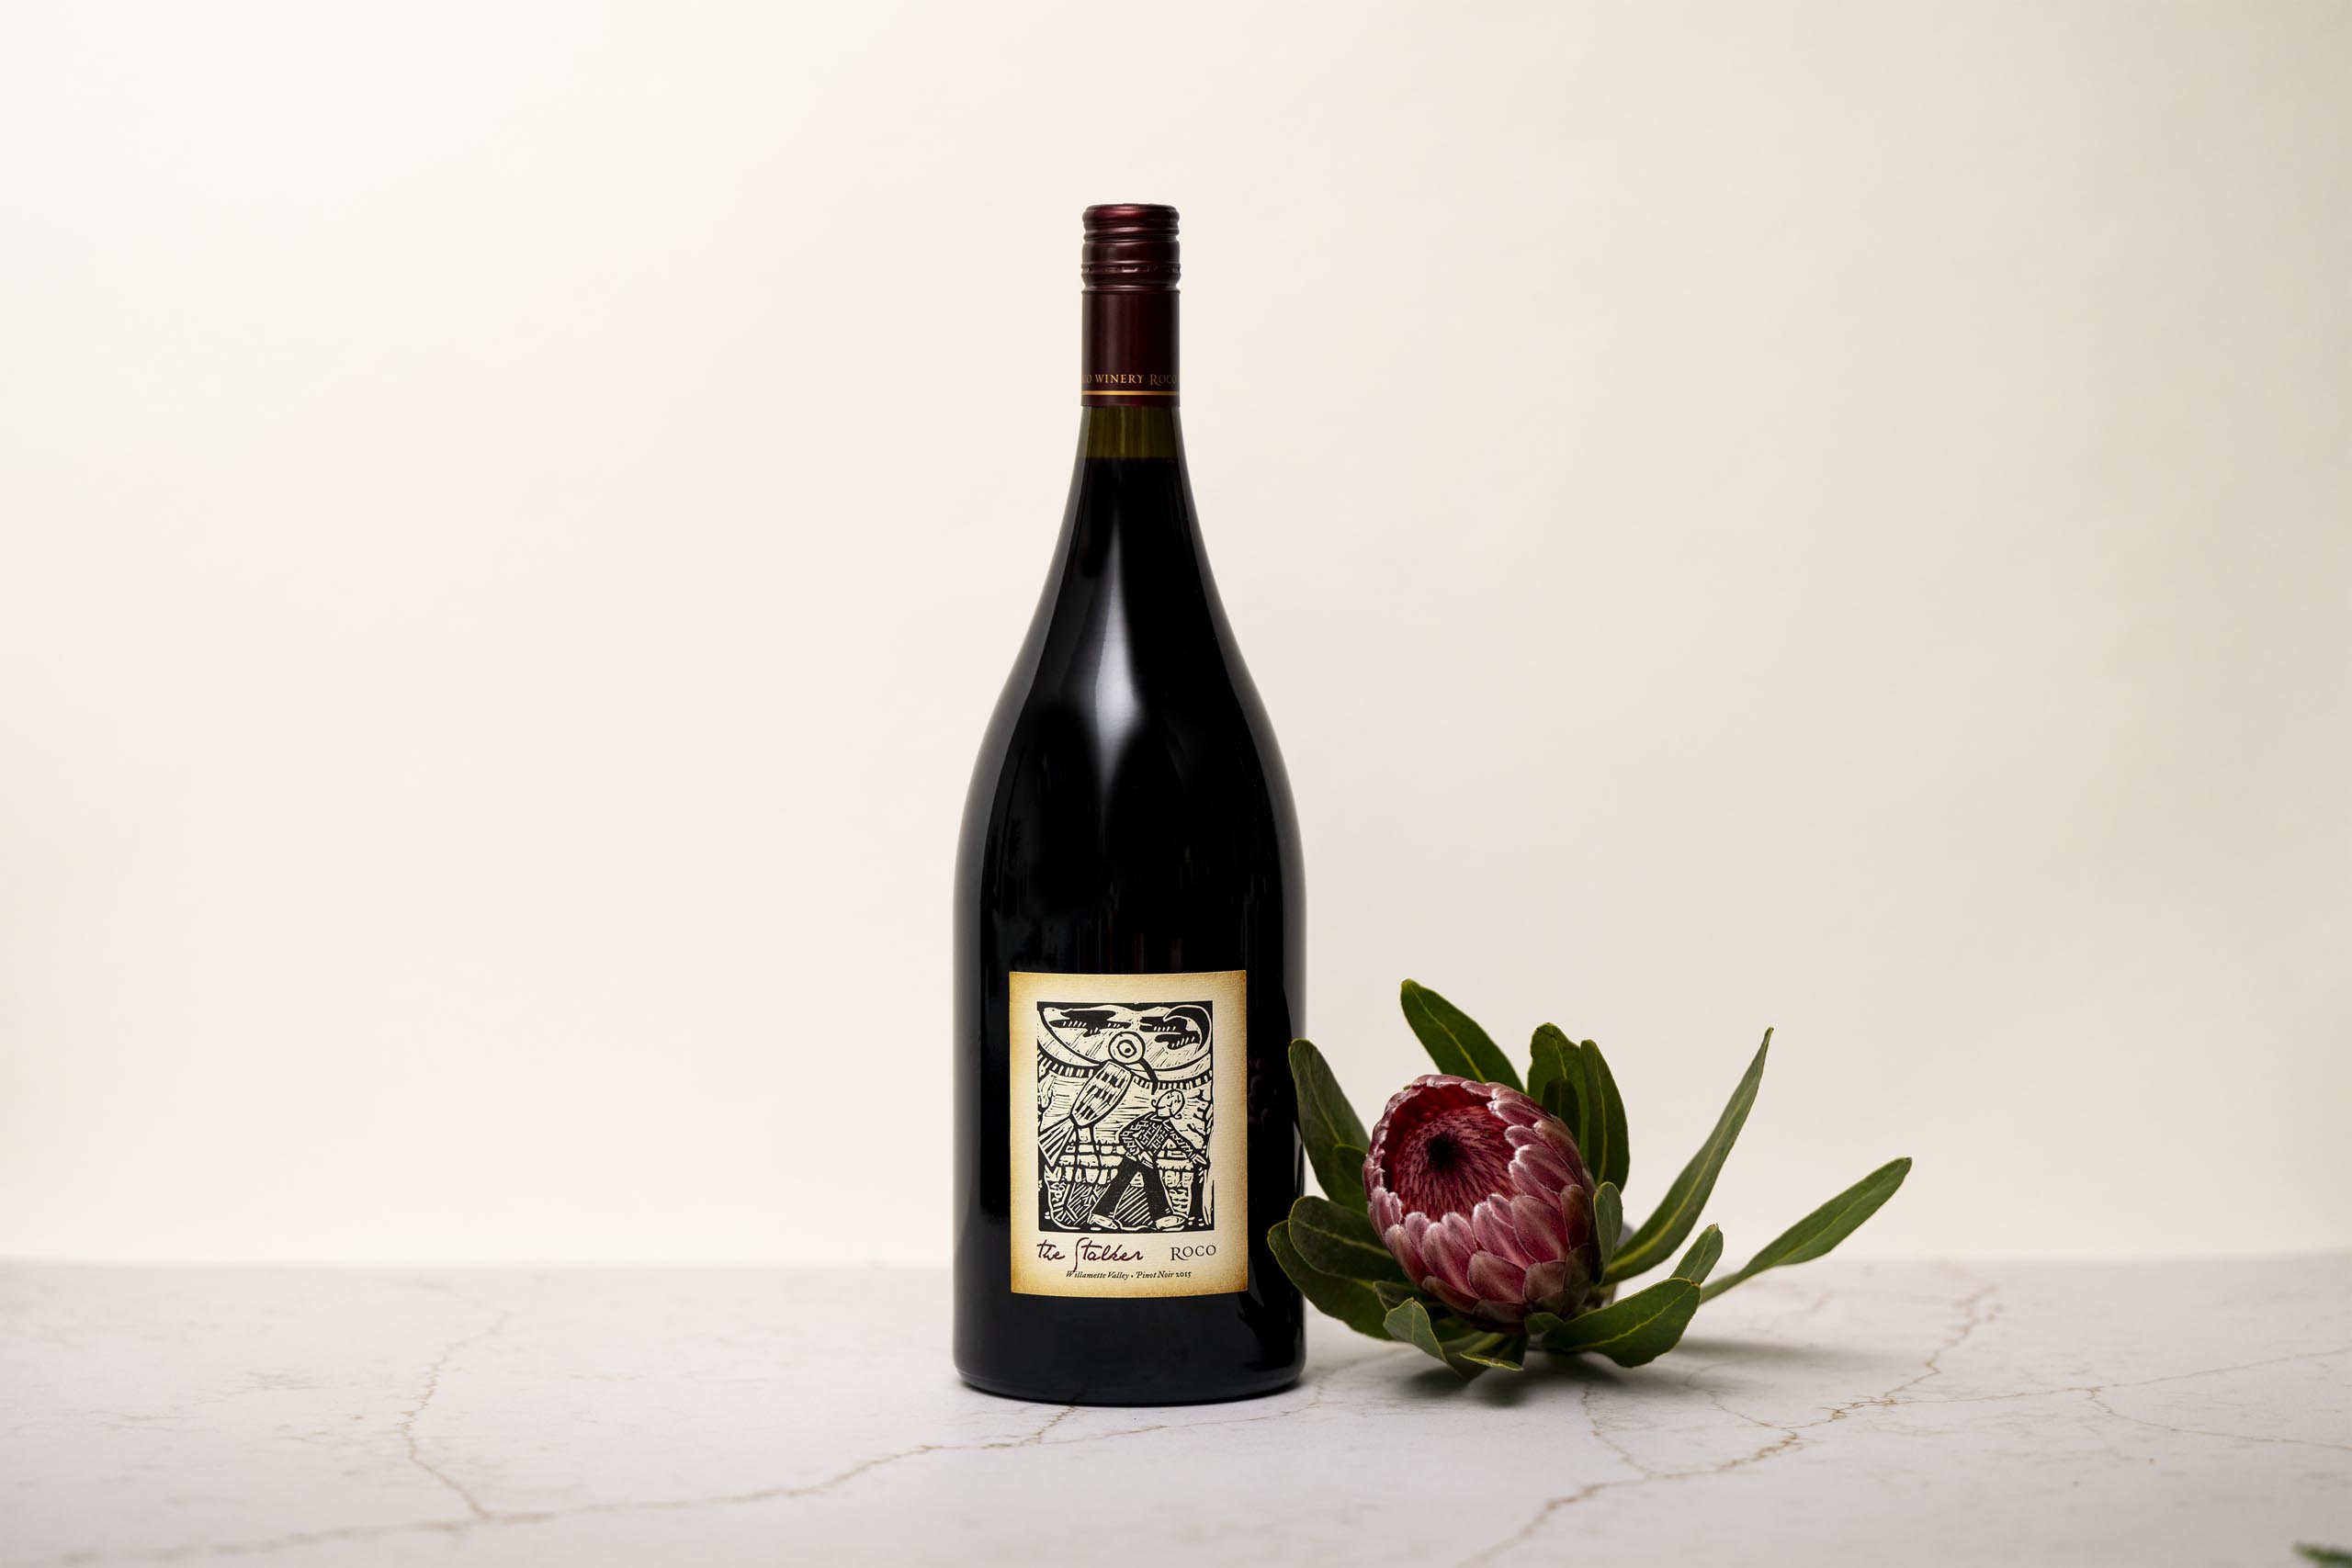 ROCO Winery - Wine Bottle Product Shoot